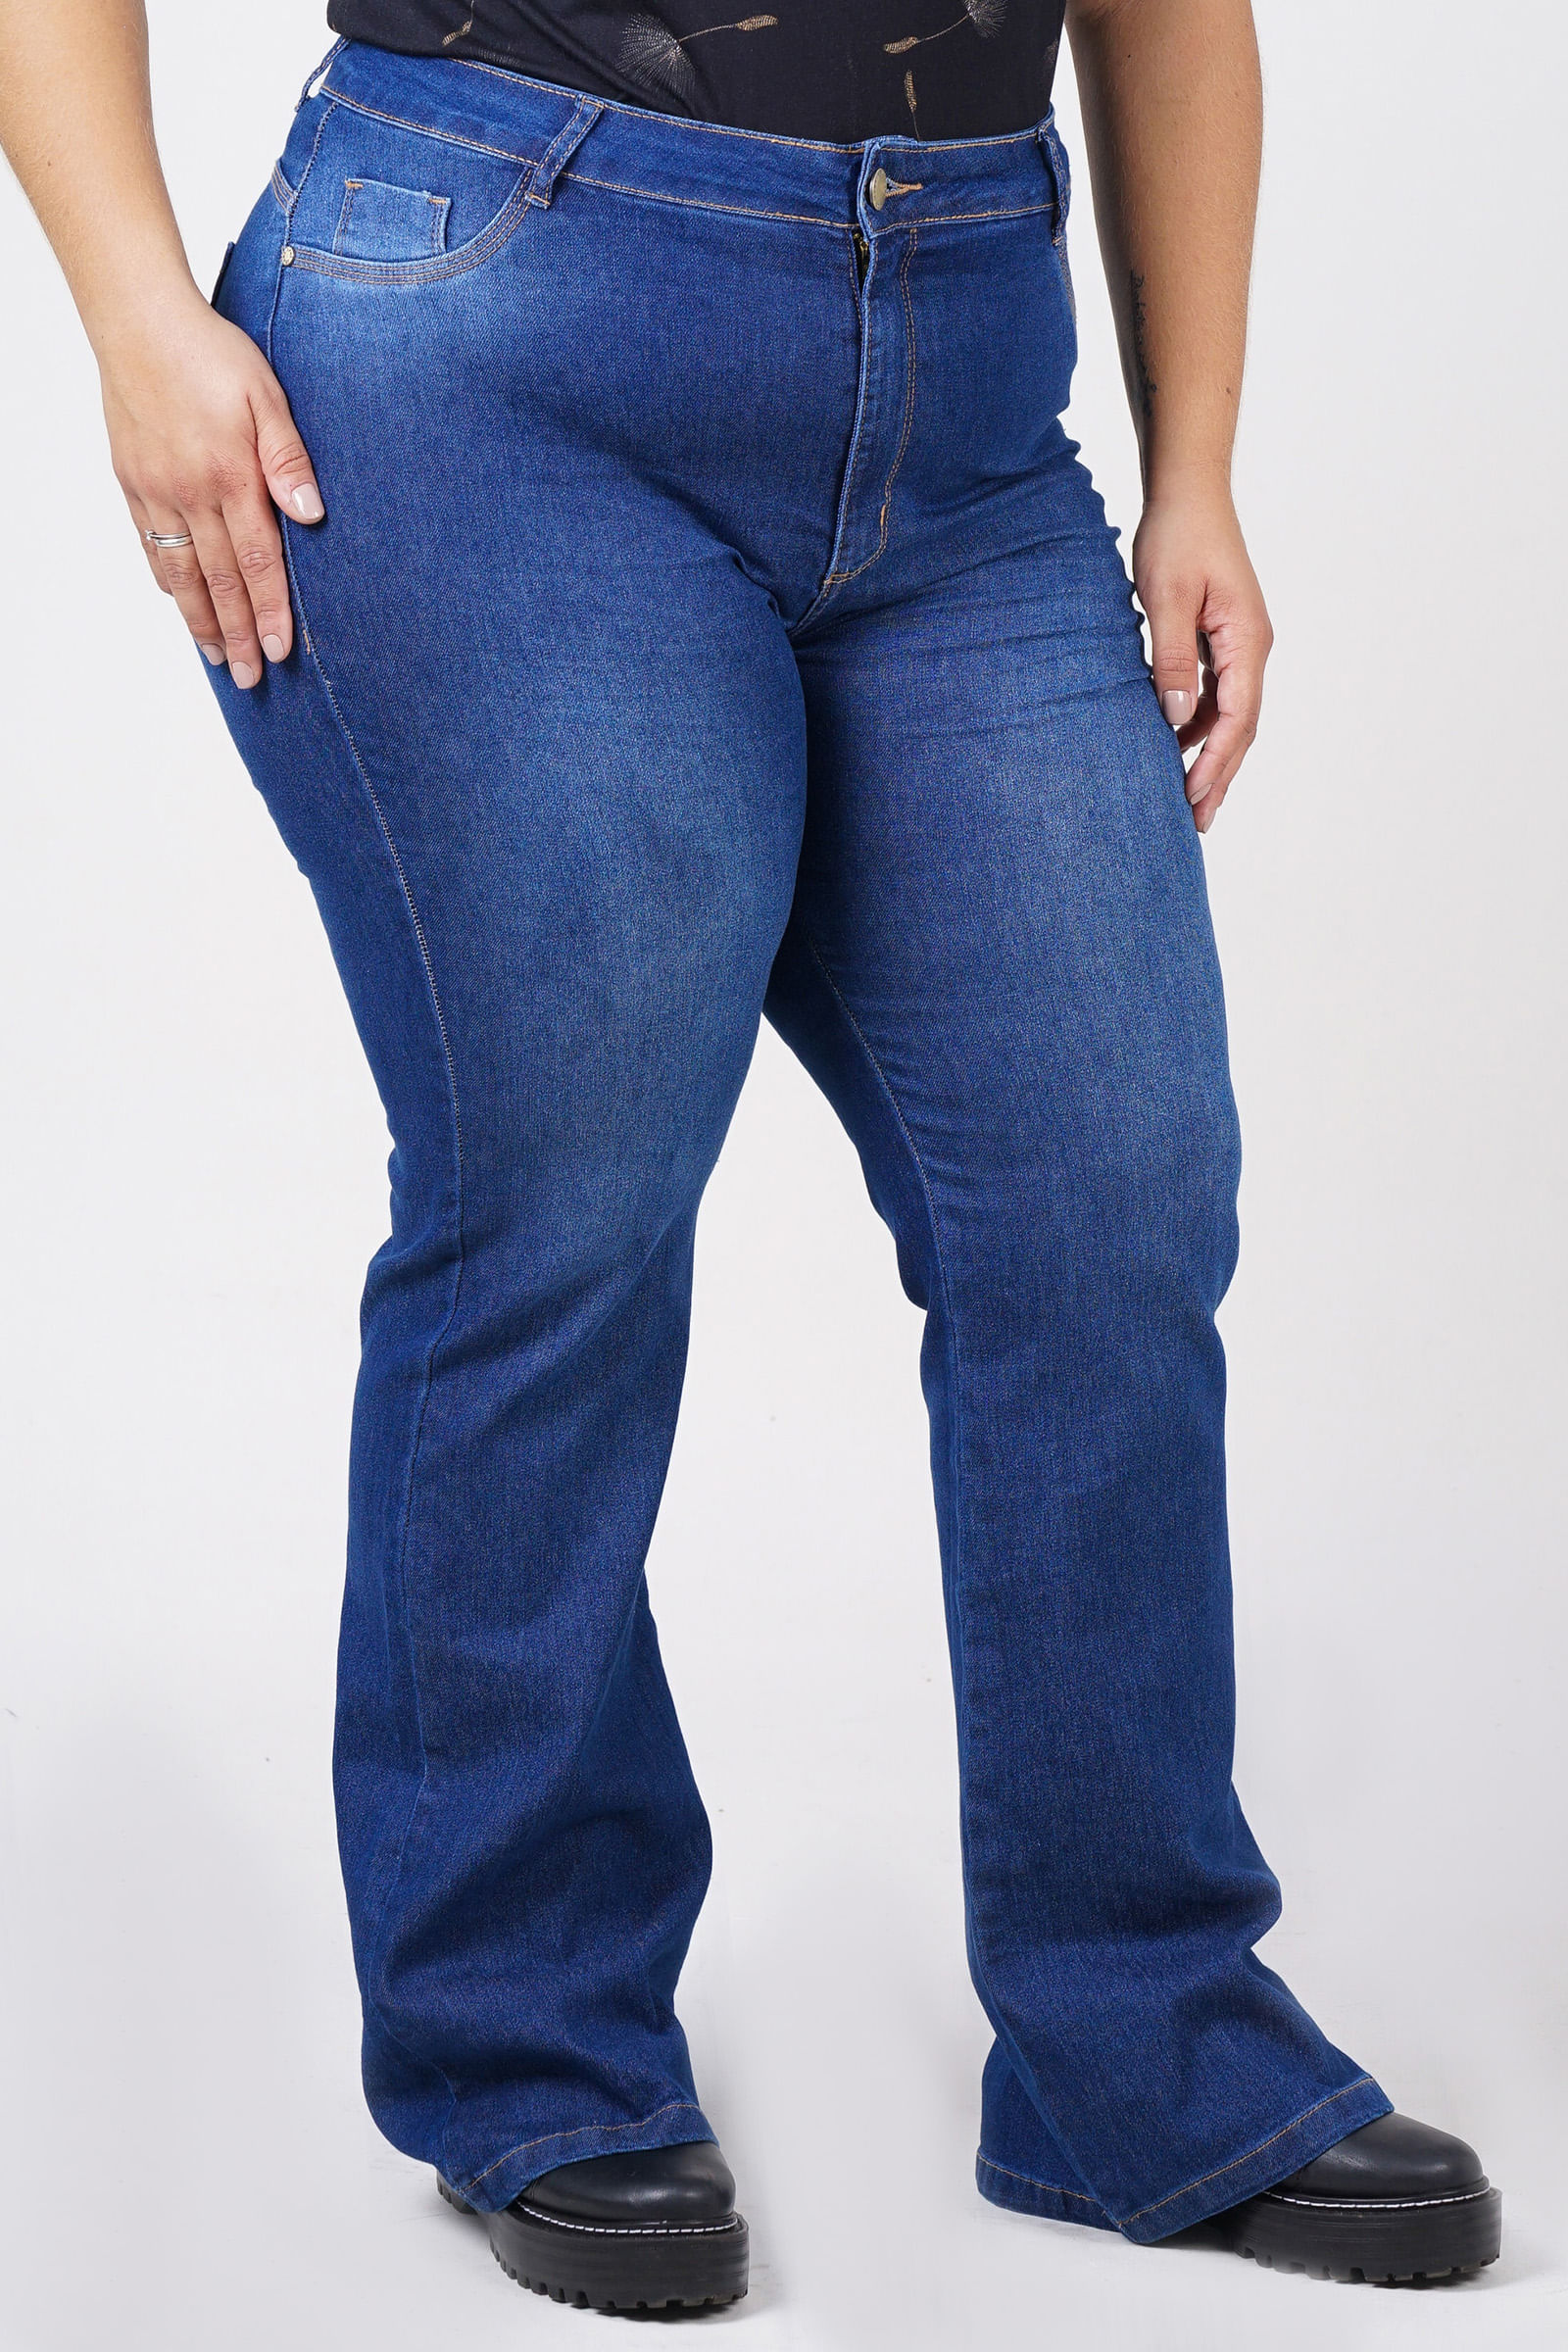 Calca-flare-blue-jeans-plus-size_0102_1